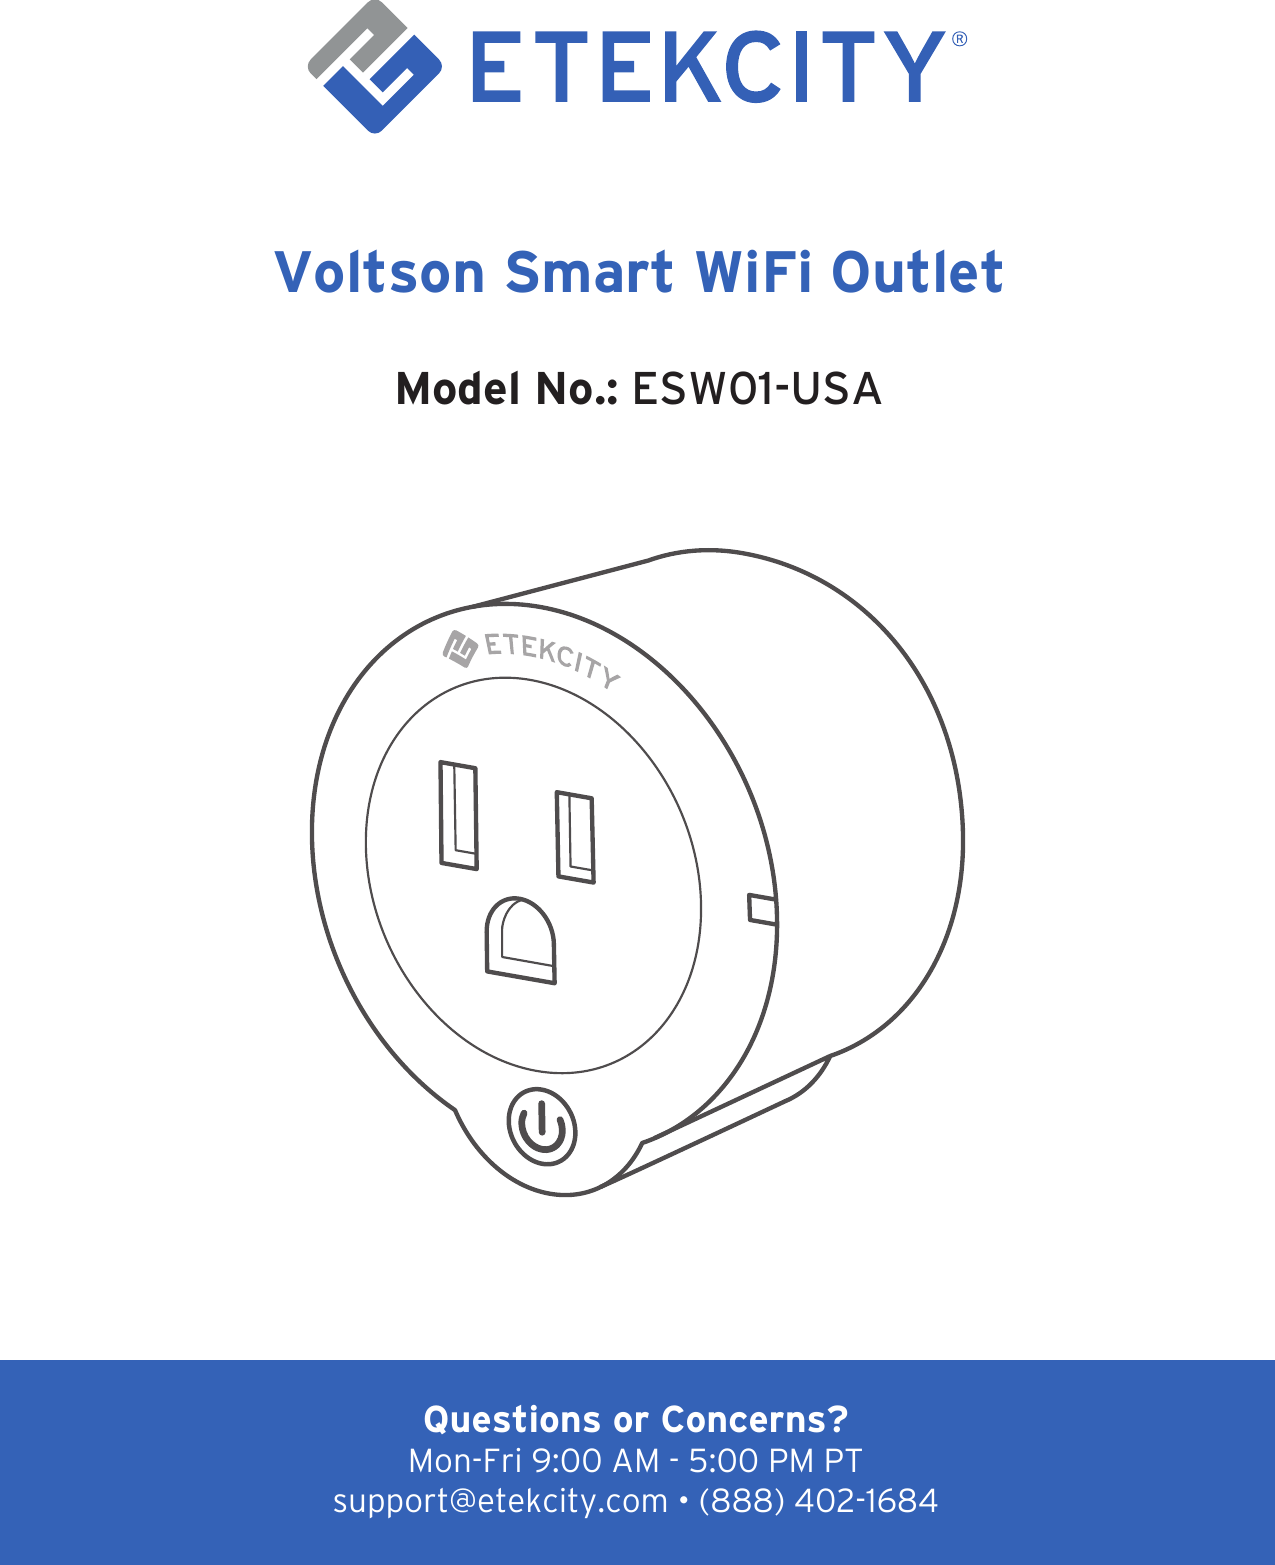 1Voltson Smart WiFi OutletModel No.: ESW01-USAQuestions or Concerns?Mon-Fri 9:00 AM - 5:00 PM PT support@etekcity.com • (888) 402-1684